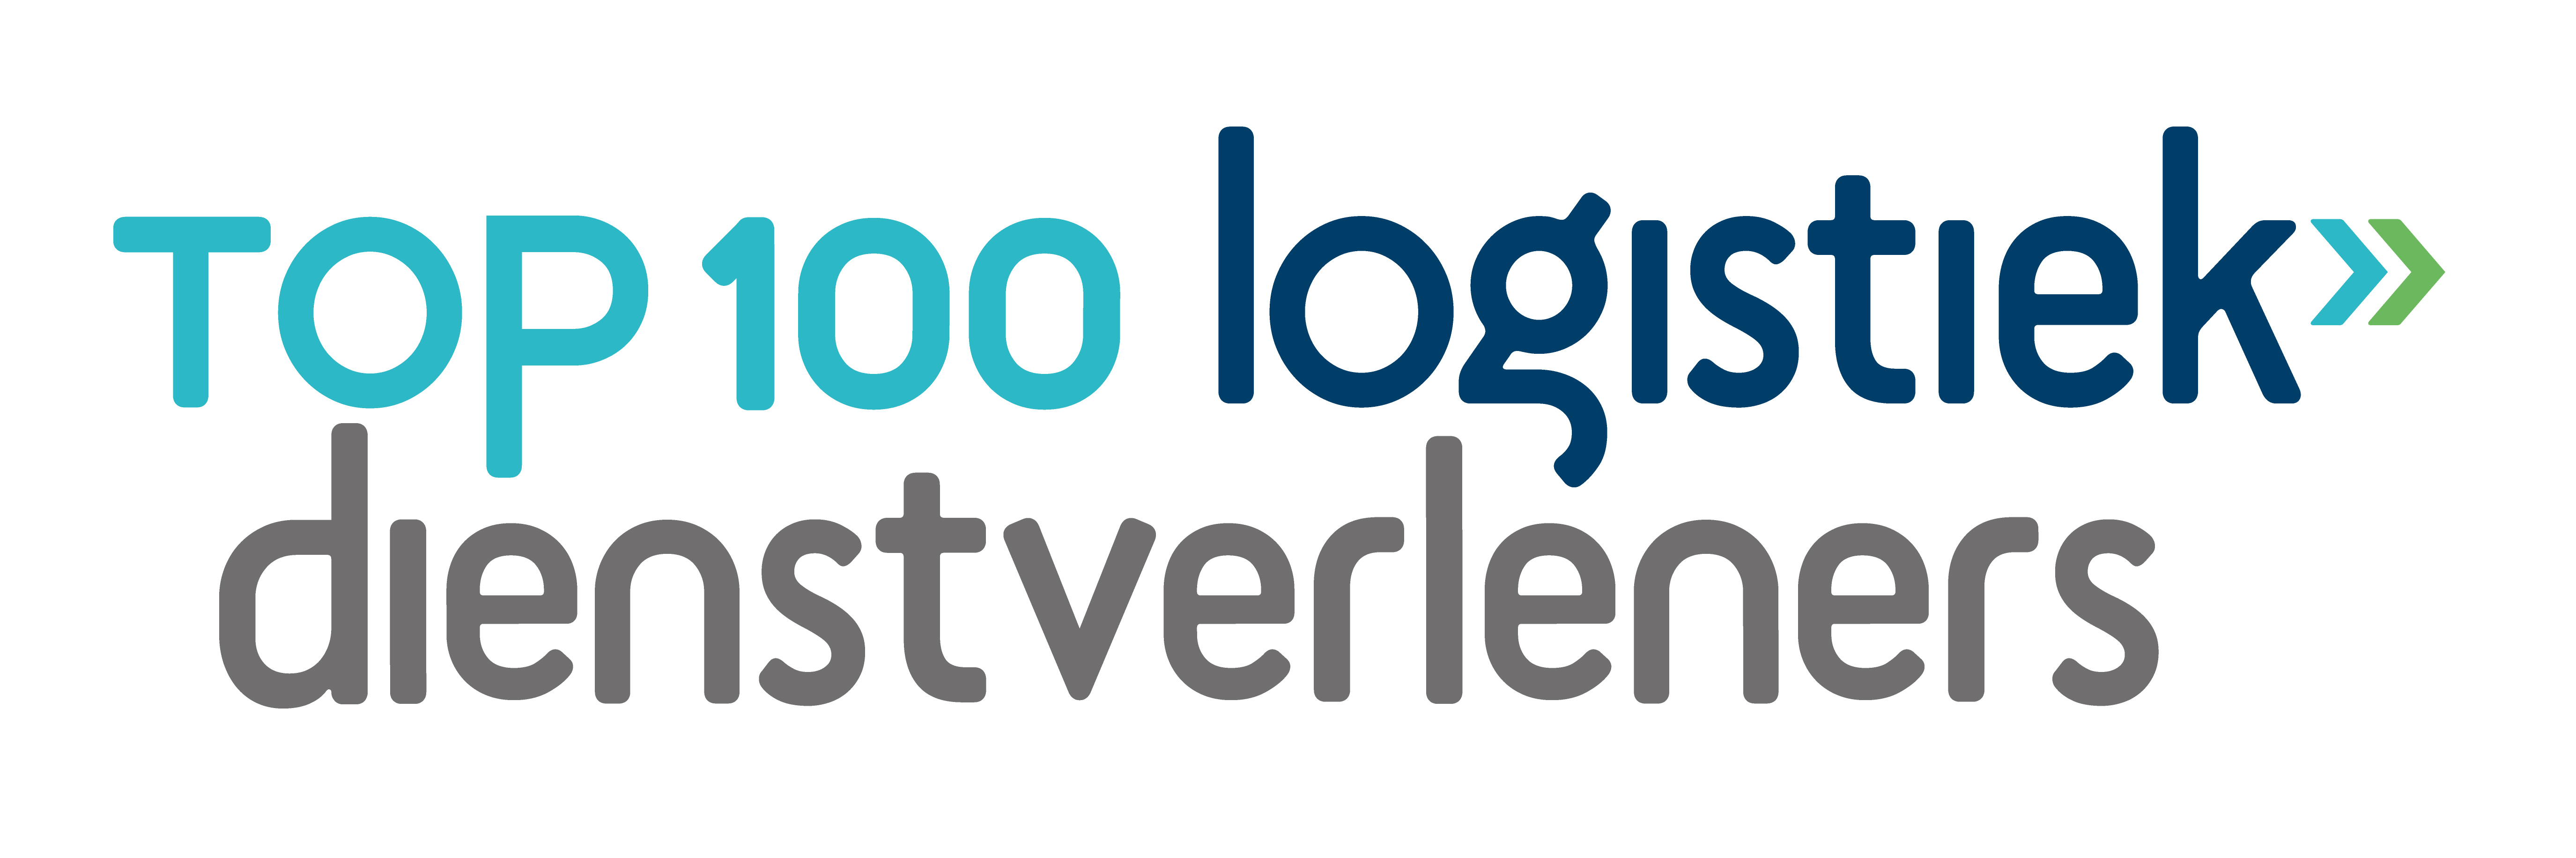 Zandbergen Transport in "Logistiek top 100"